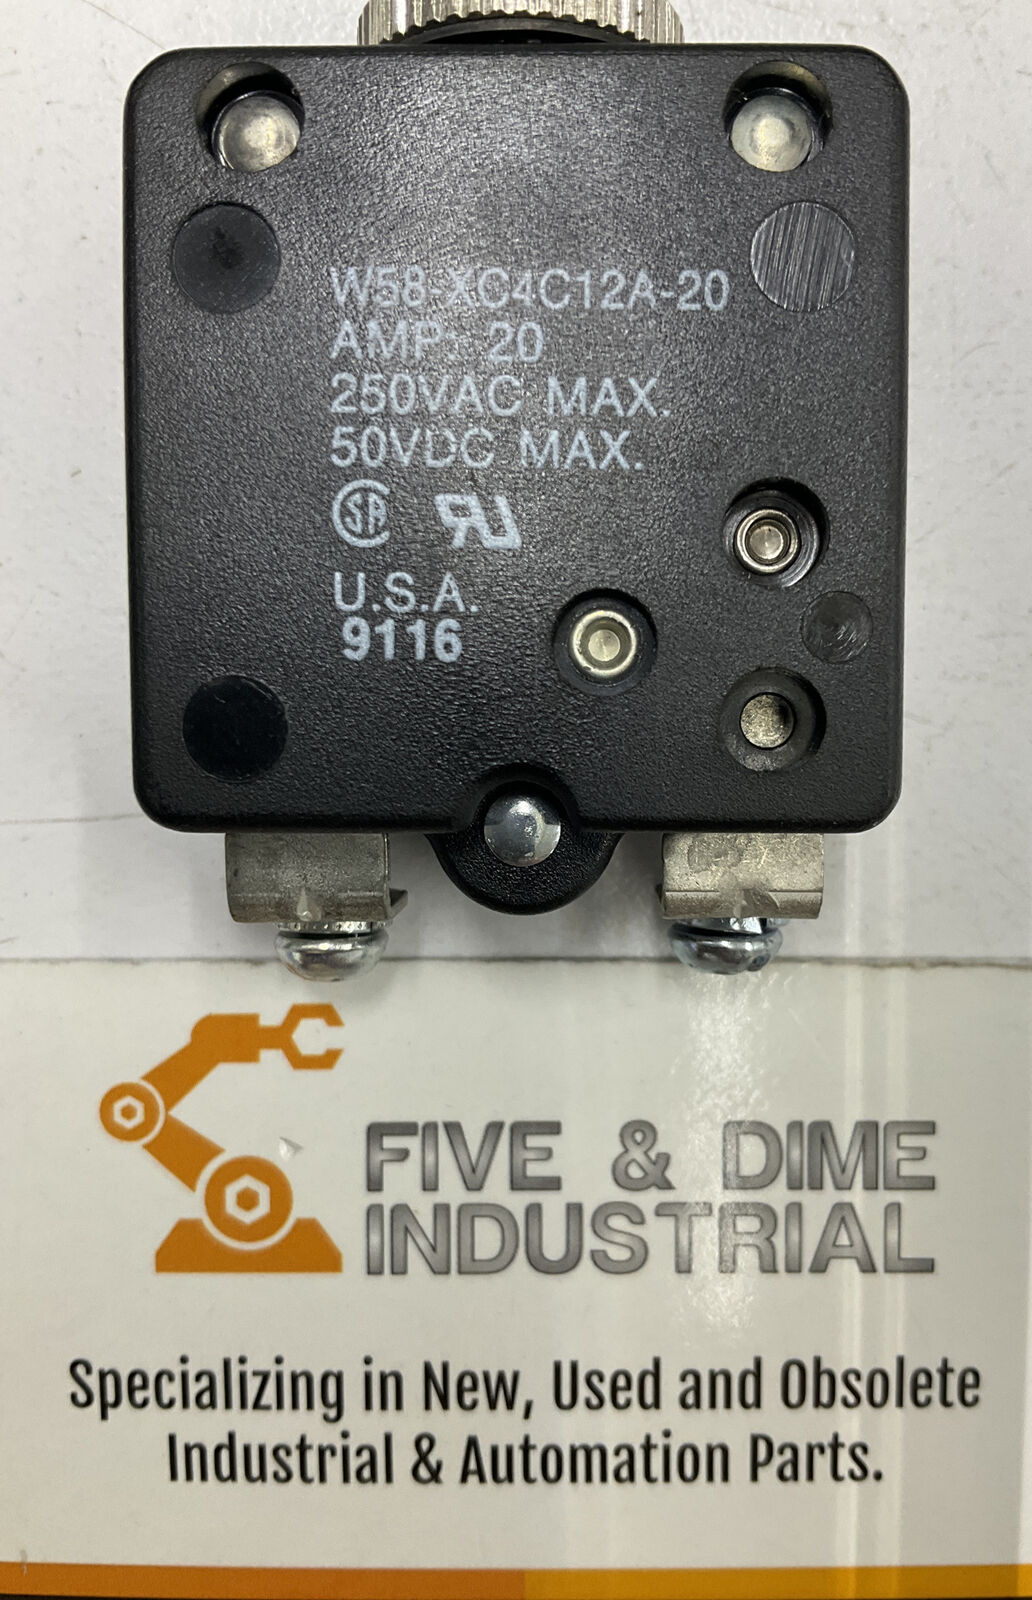 Potter & Brumfield W58-XC4C12A-20 Circuit Breaker 20 Amp 250VAC 50VDC (BK145)